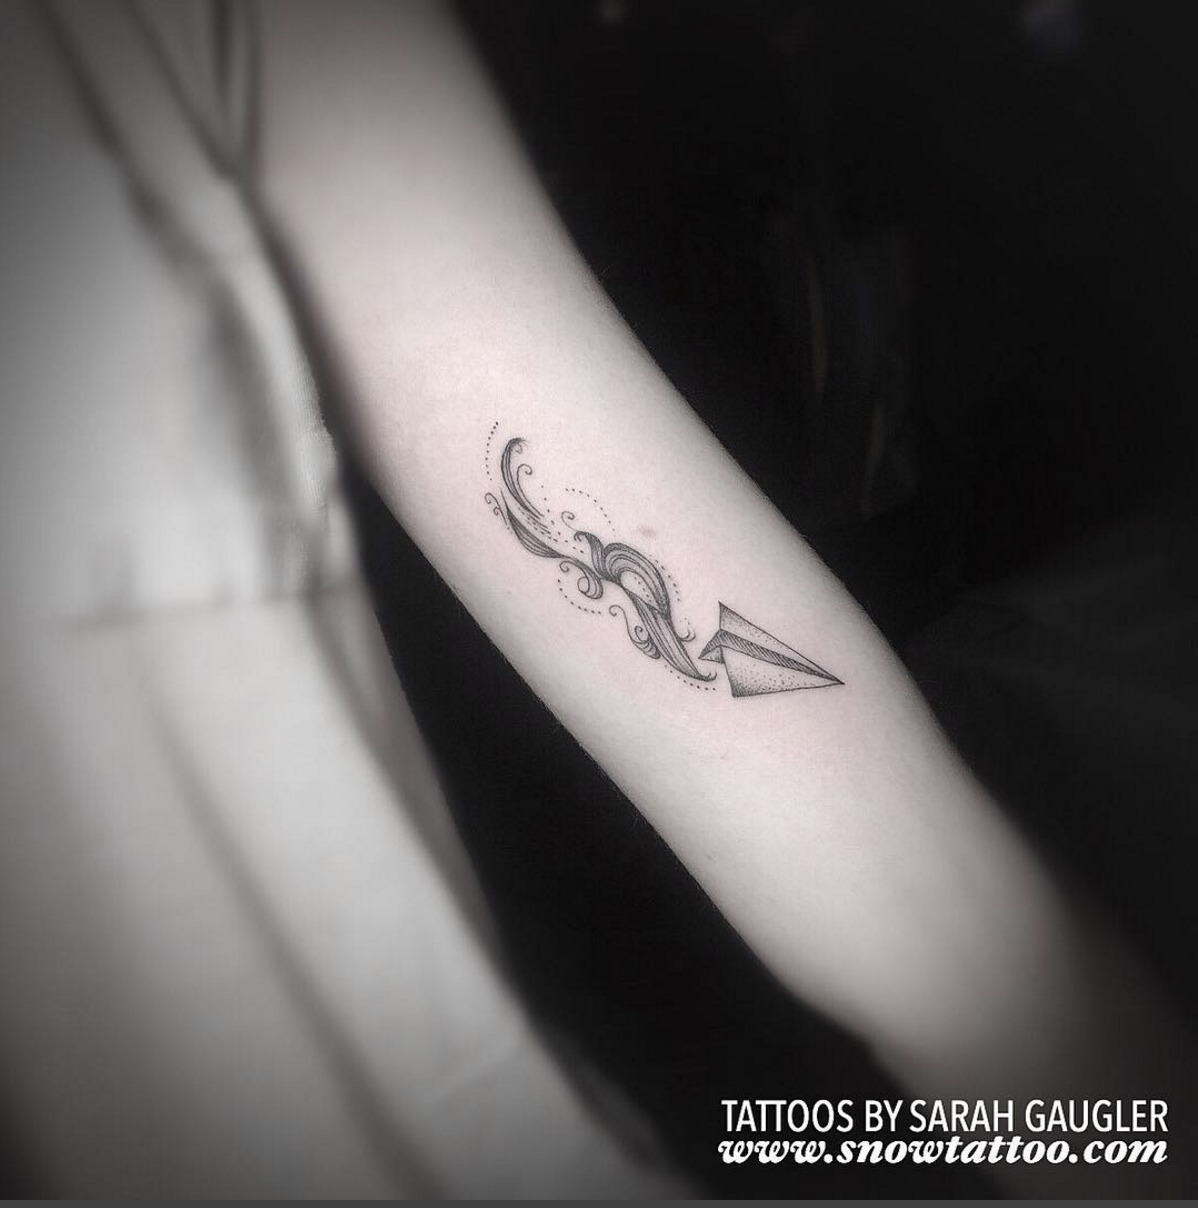 Sarah Gaugler Snow Tattoo Custom Paper Plane Magic Original Signature Design Fine Lines Detailed Intricate Elegant Finelinetattoo New York Best Tattoos Best Tattoo Artist NYC.png